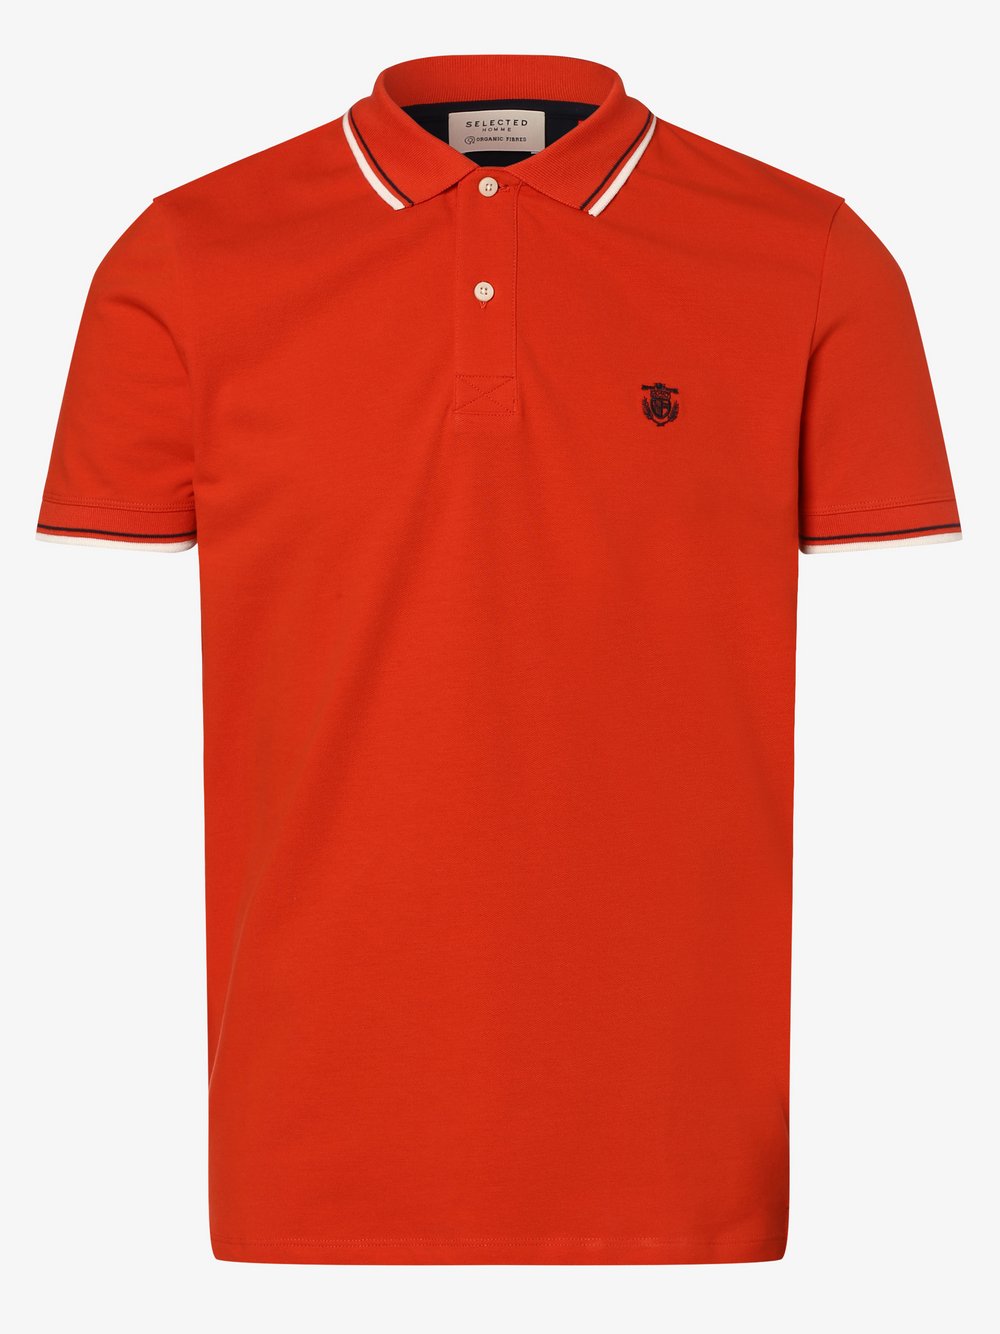 Selected - Męska koszulka polo – SLHNewseason, pomarańczowy